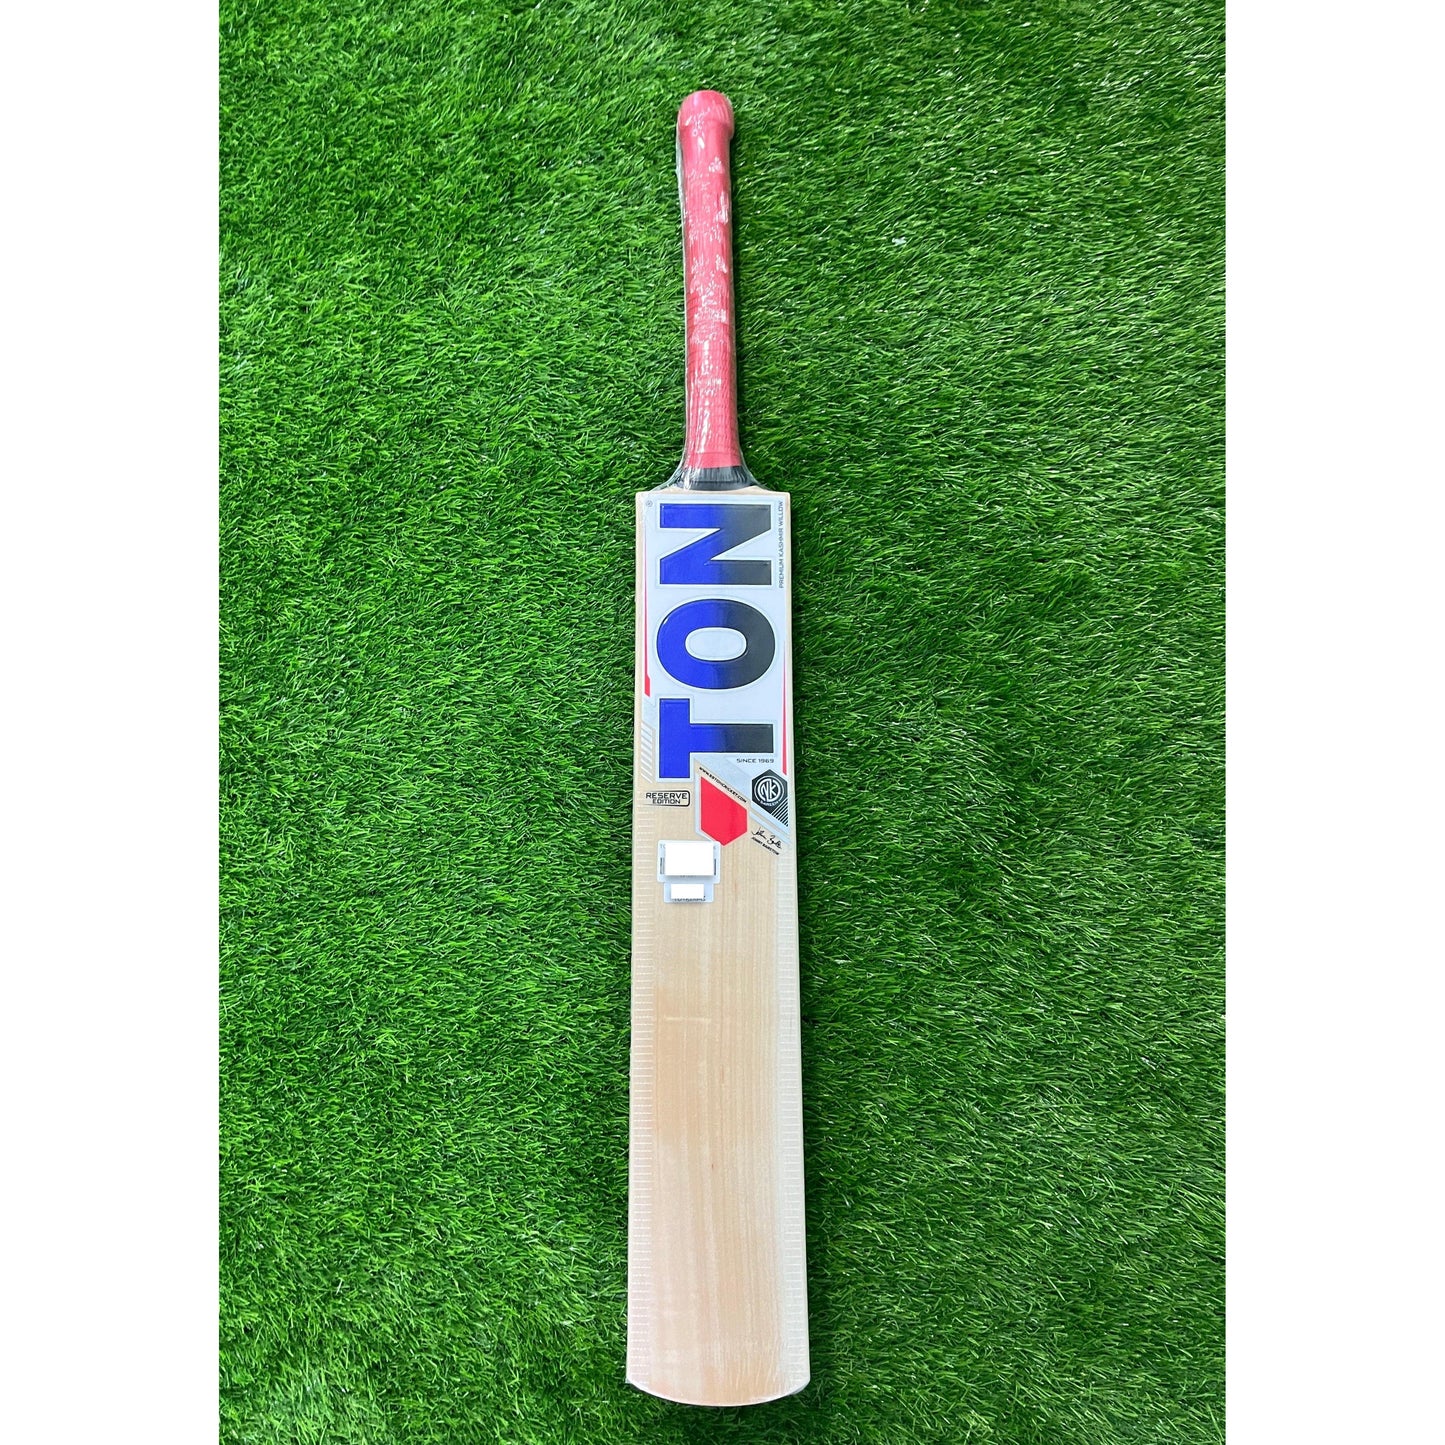 SS Ton Range Reserve Edition Kashmir Willow Cricket Bat - Junior Size 4 (Four)